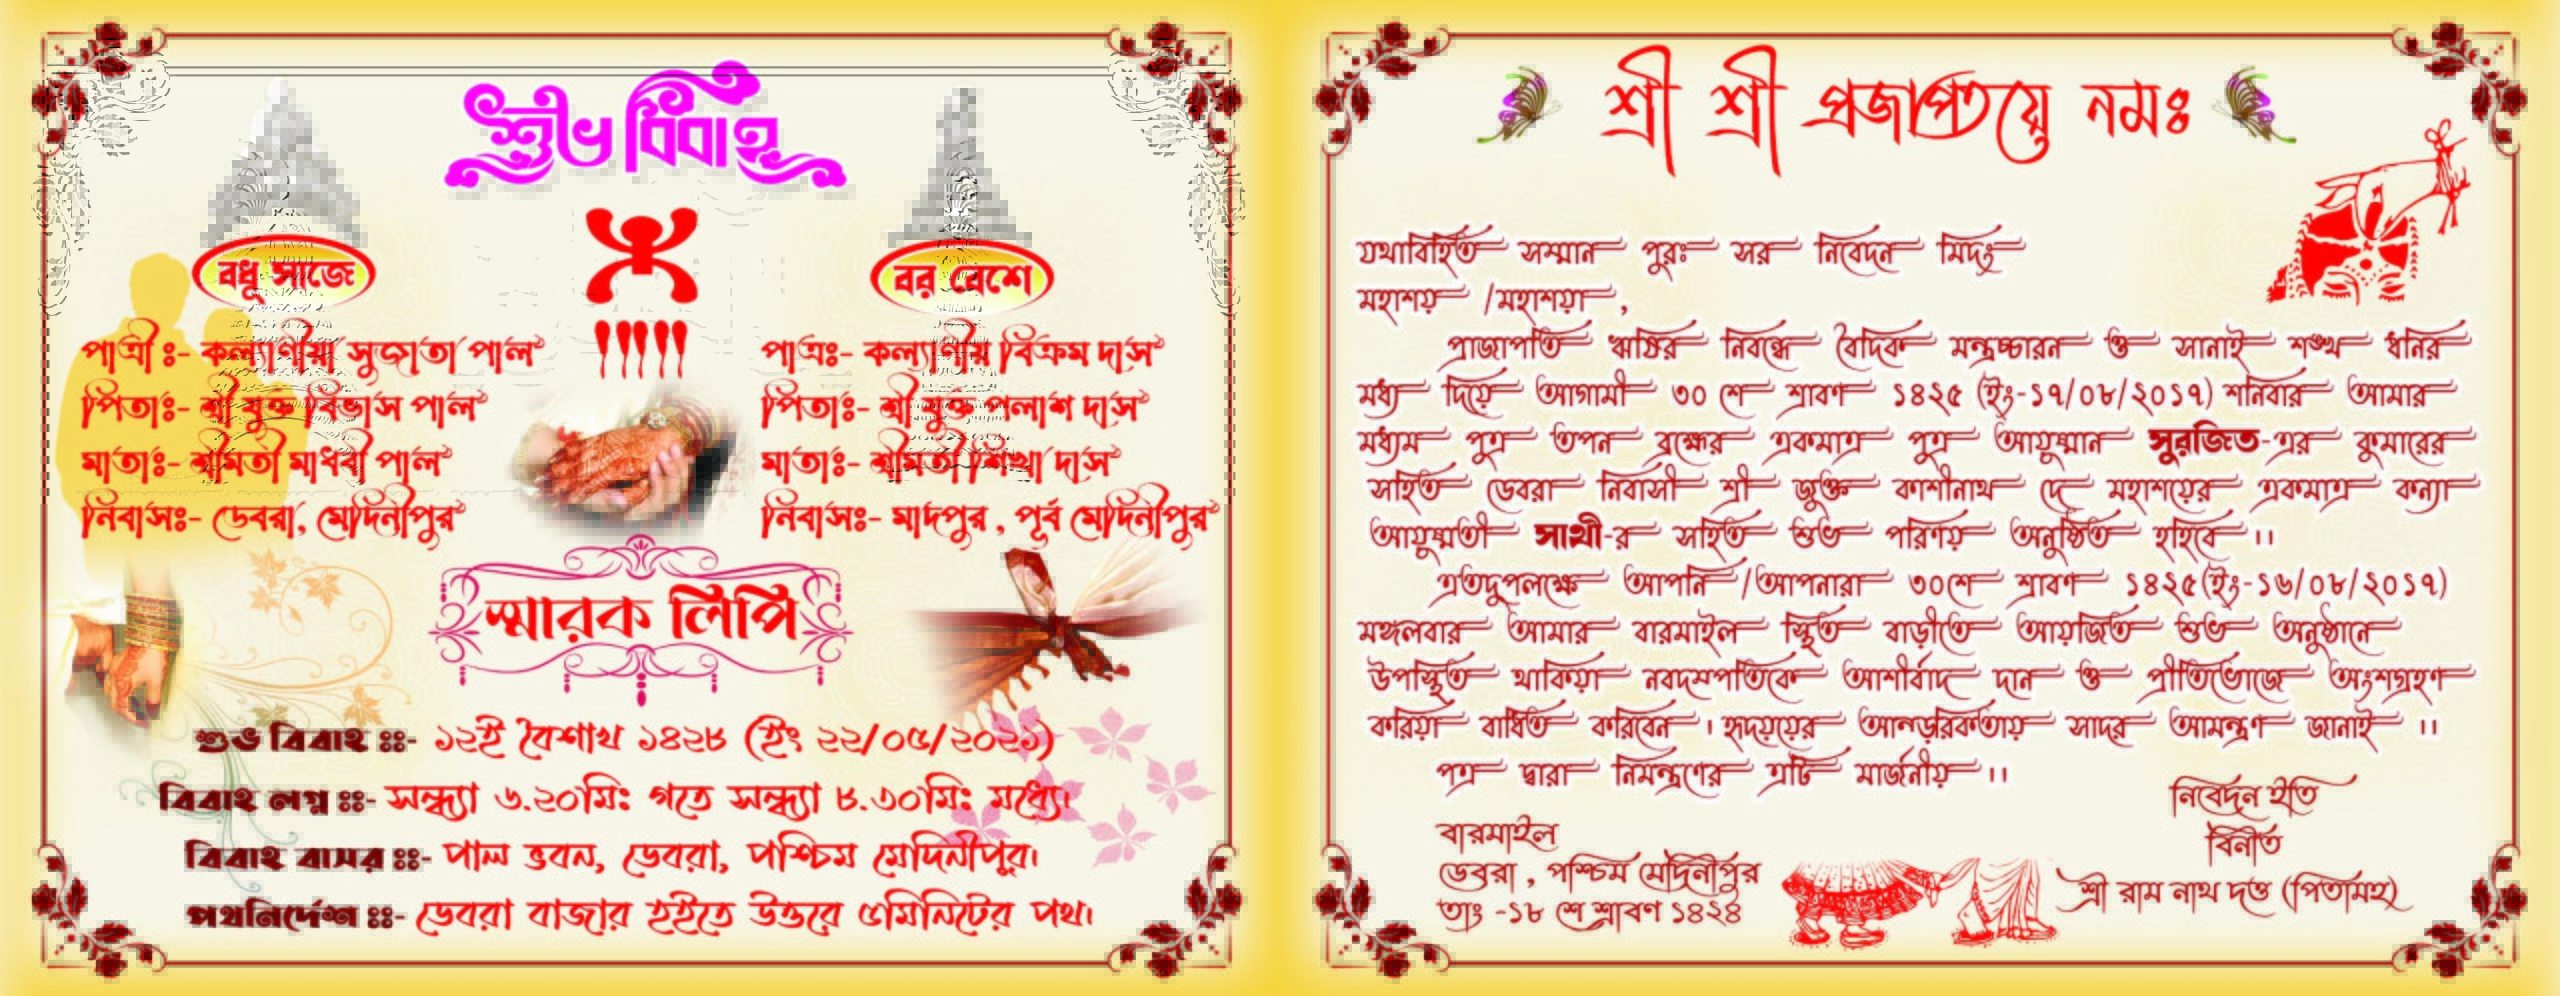 bengali wedding album design psd free download